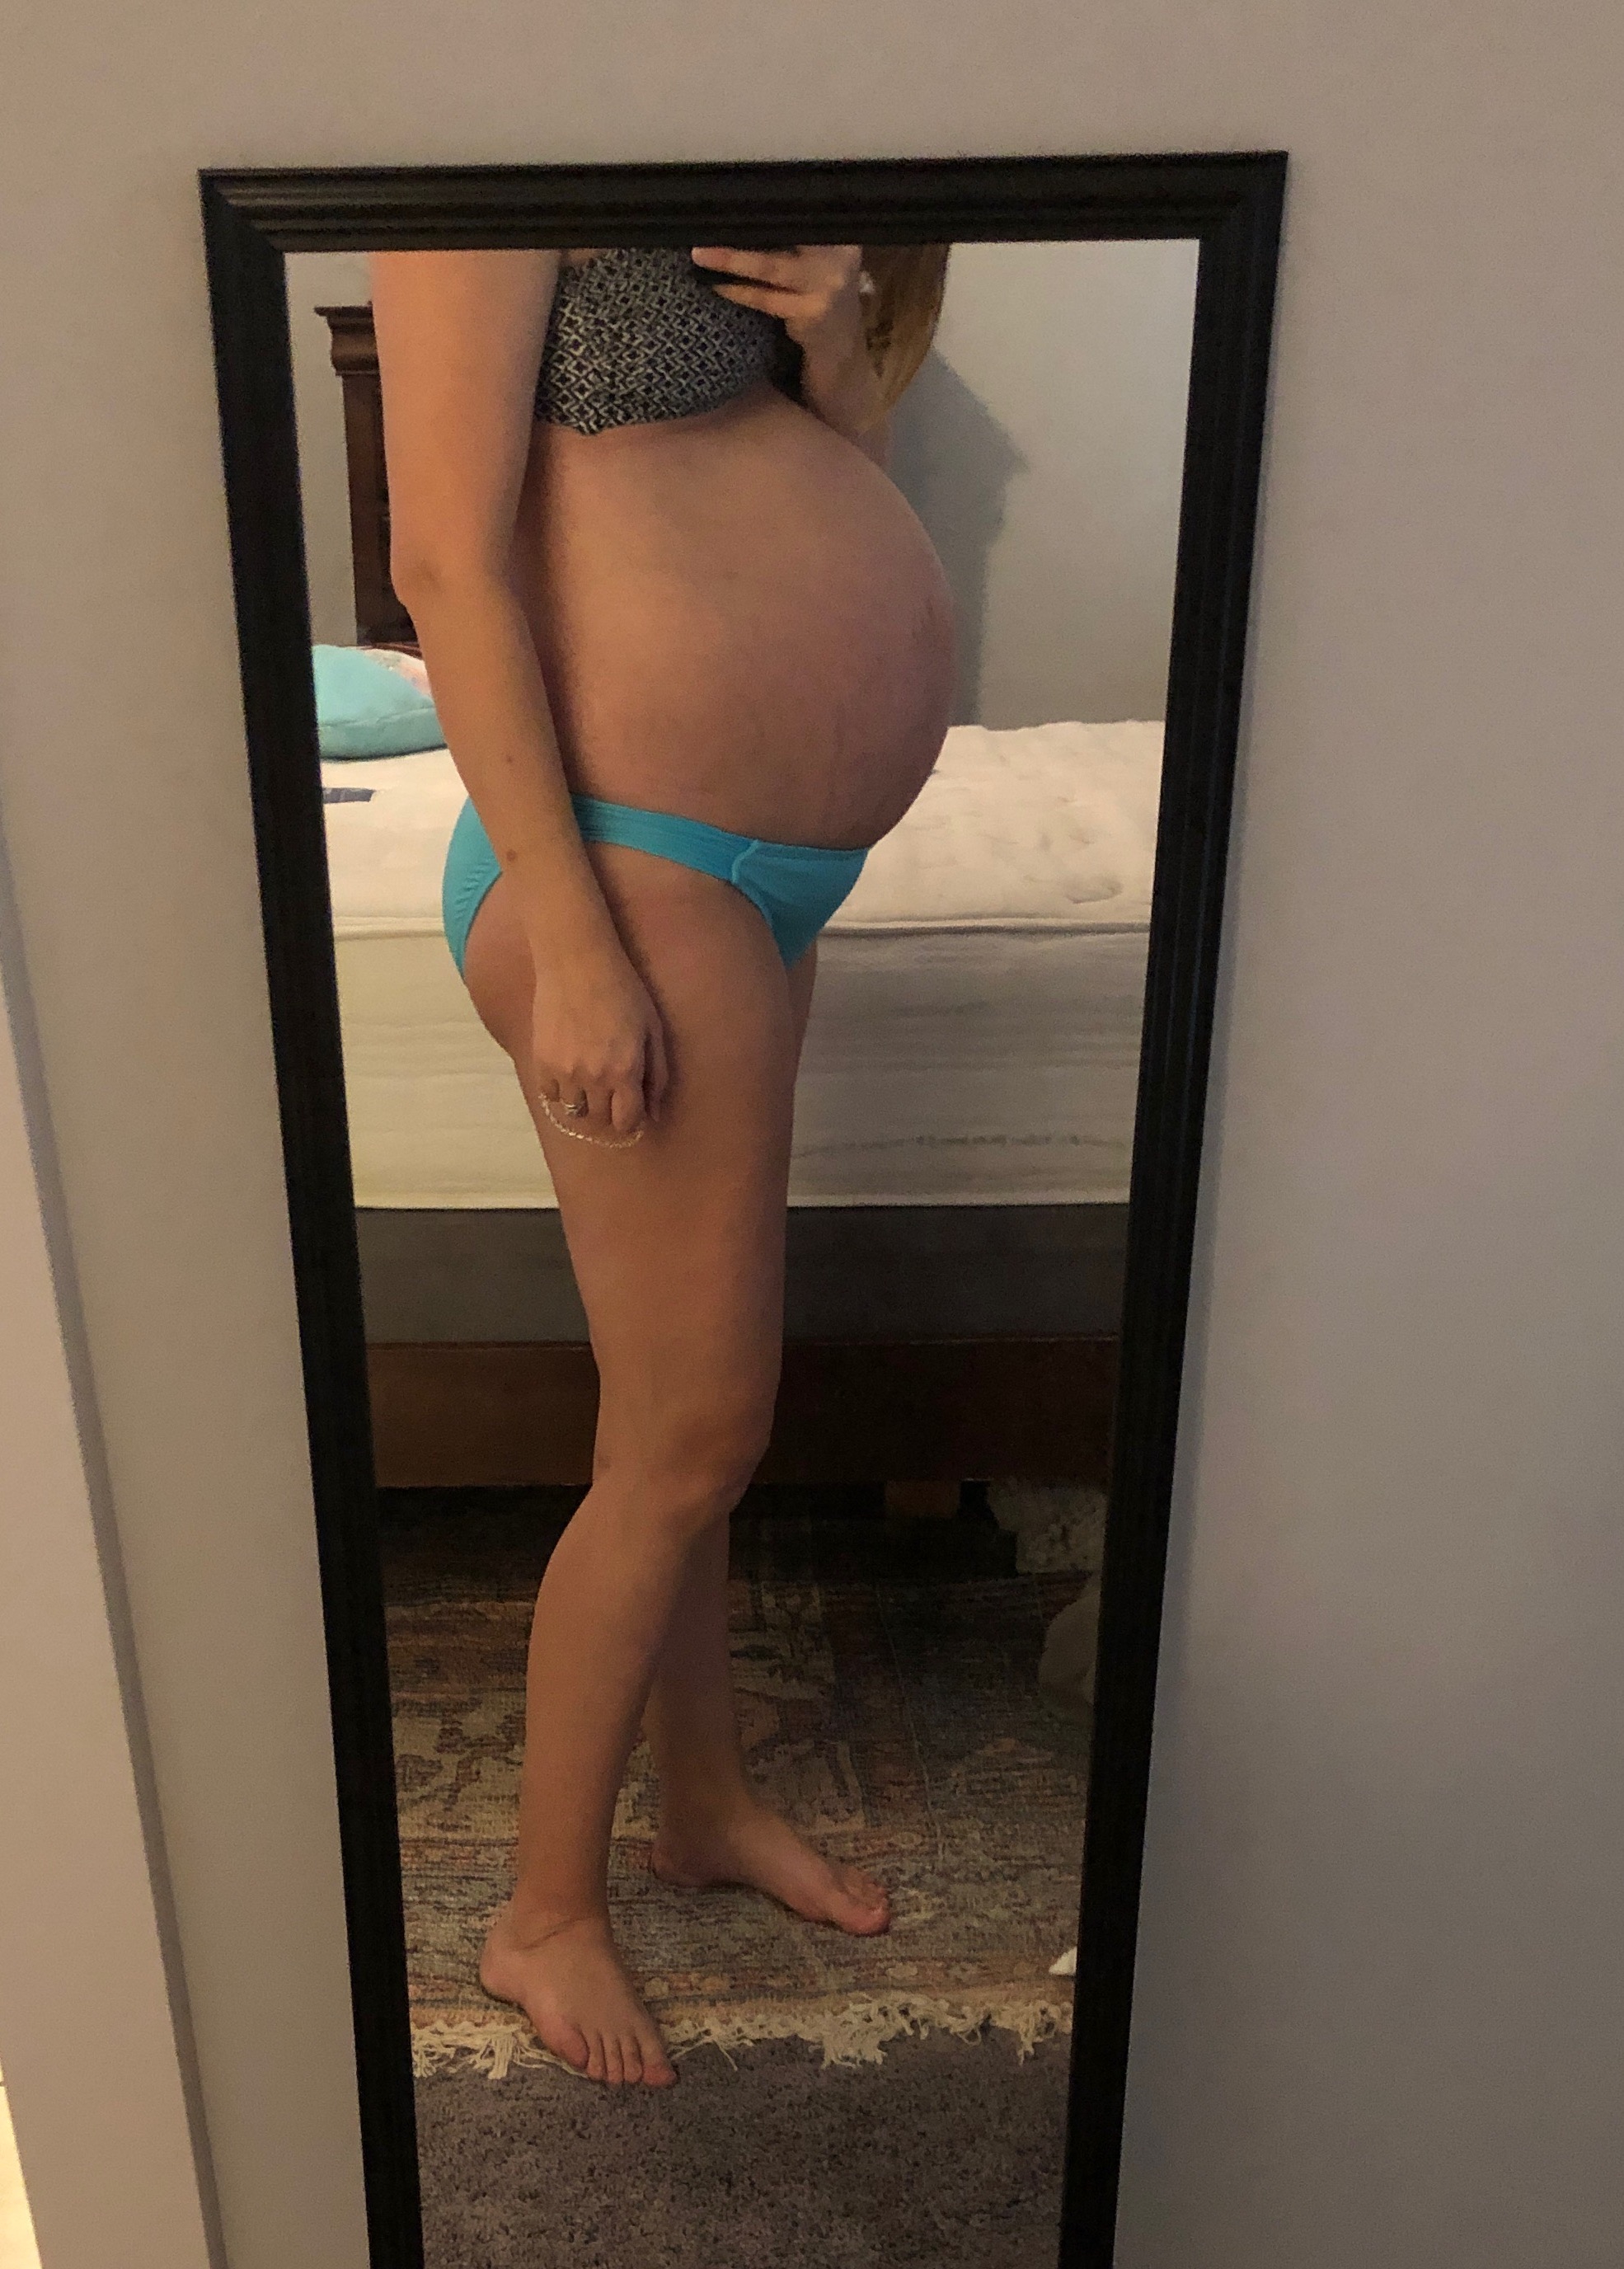 My 37 Week Pregnant Wife Showing Off Her Bump In A Bikini